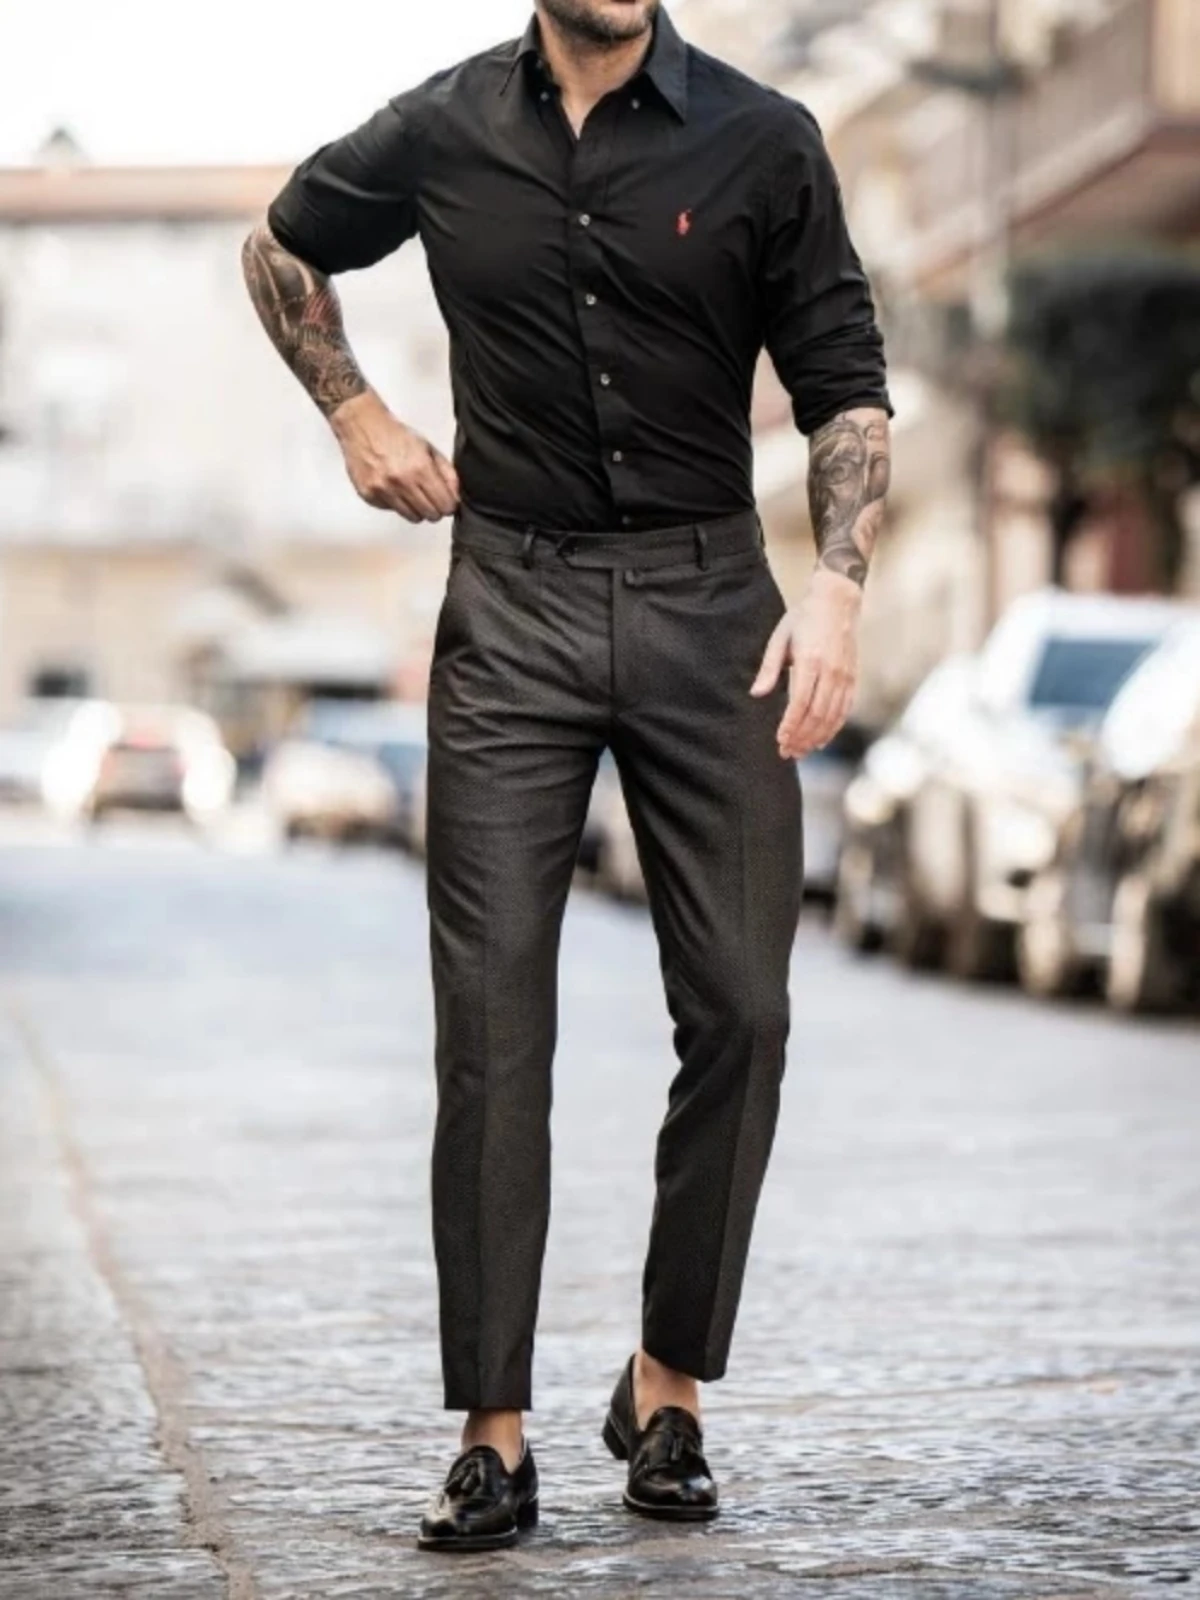 Black shirt with dark grey pants